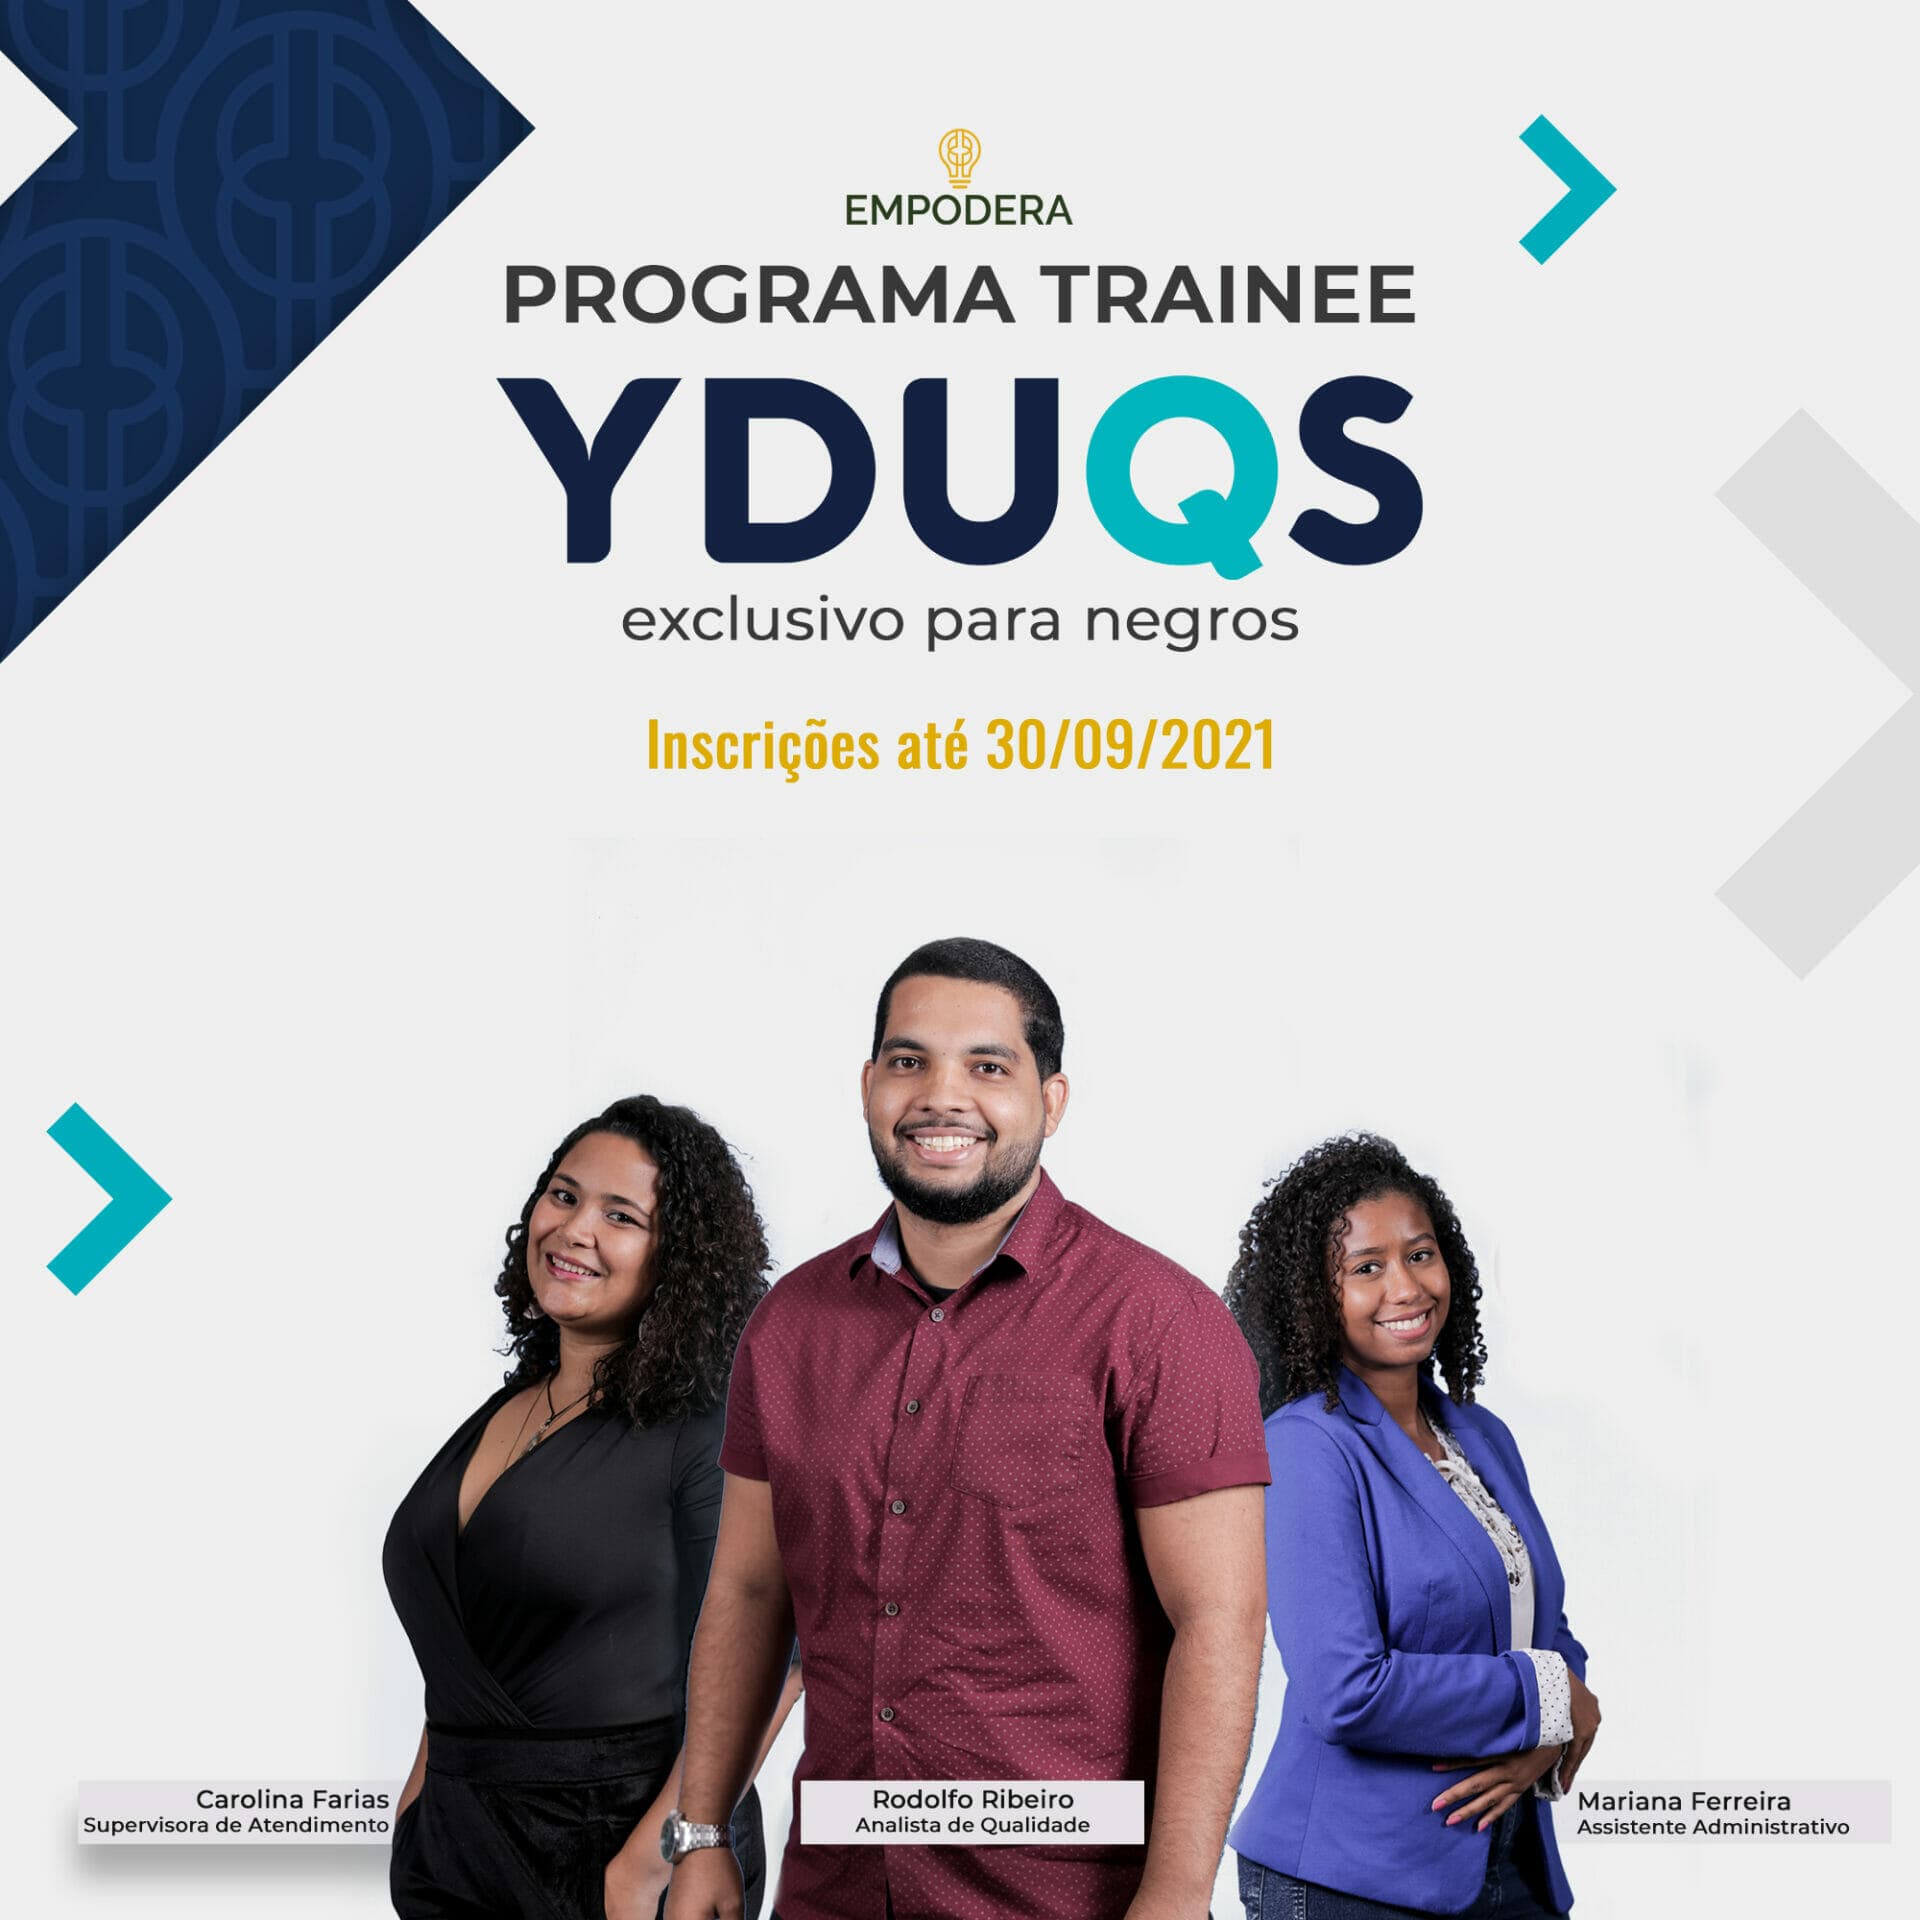 Yduqs abre processo seletivo de trainees exclusivo para negros